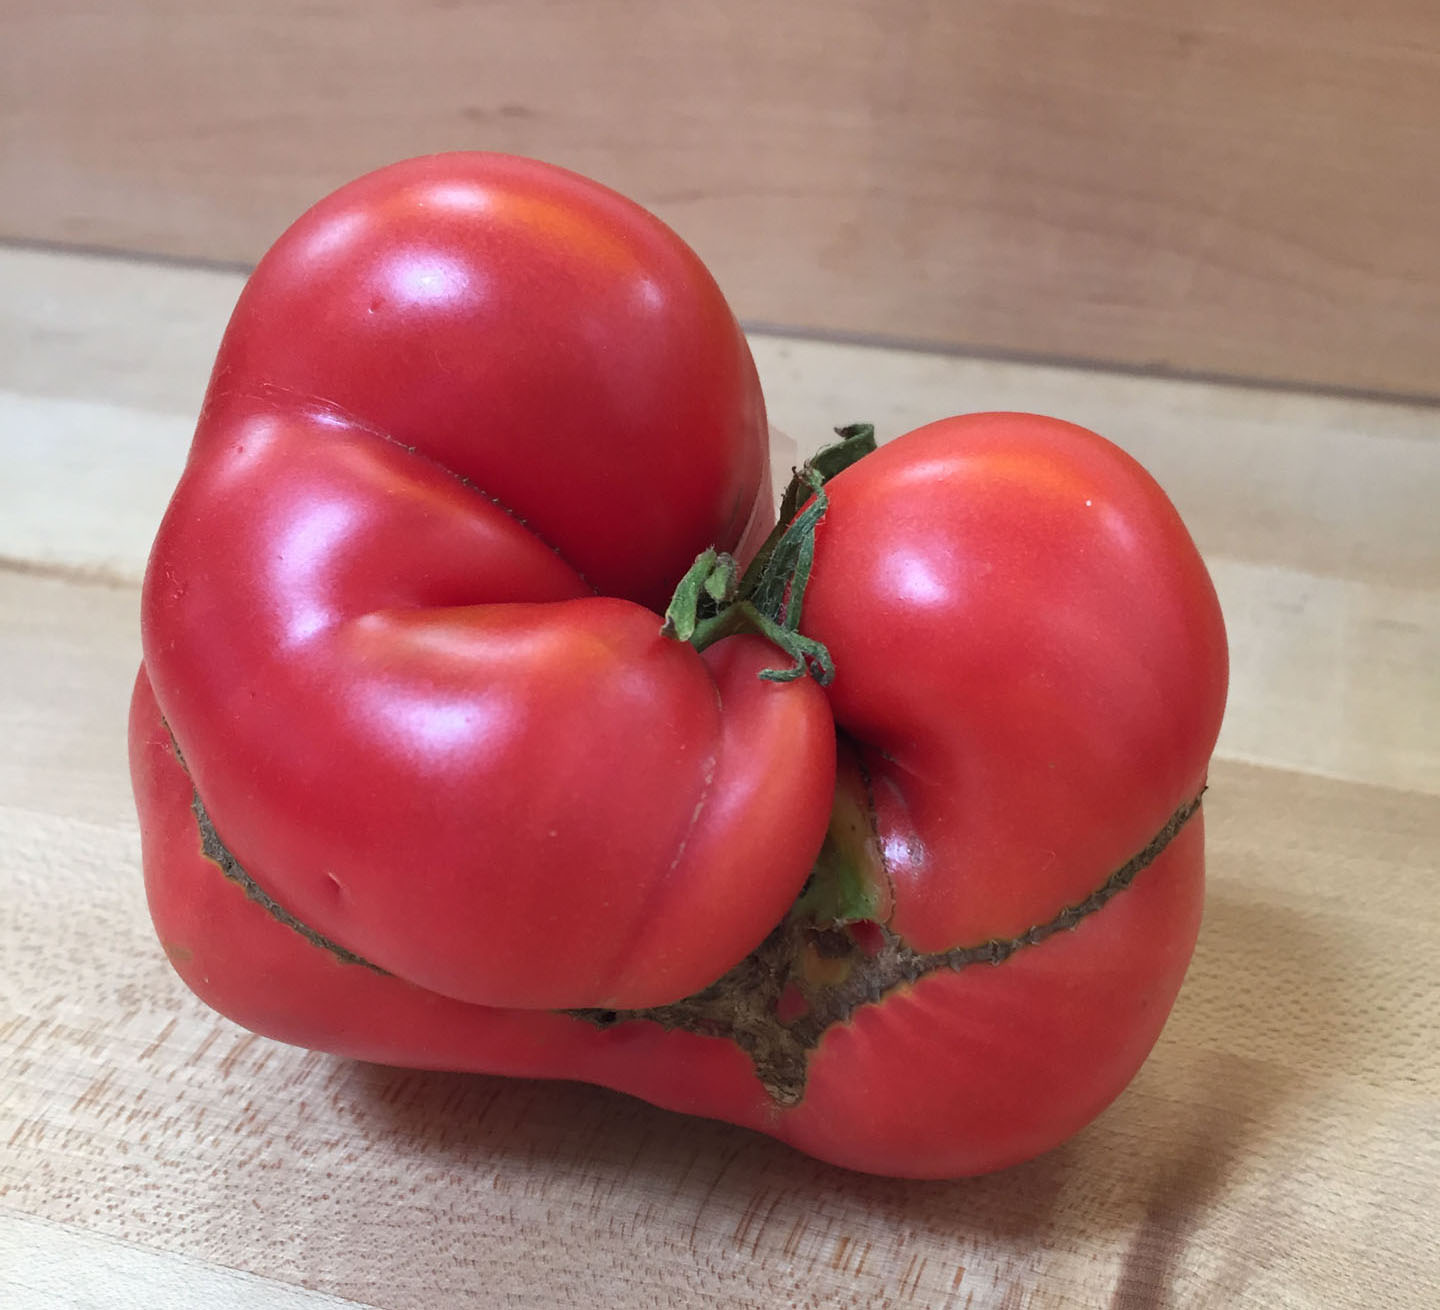 Sue Hochstein's "ugly fruit" tomato